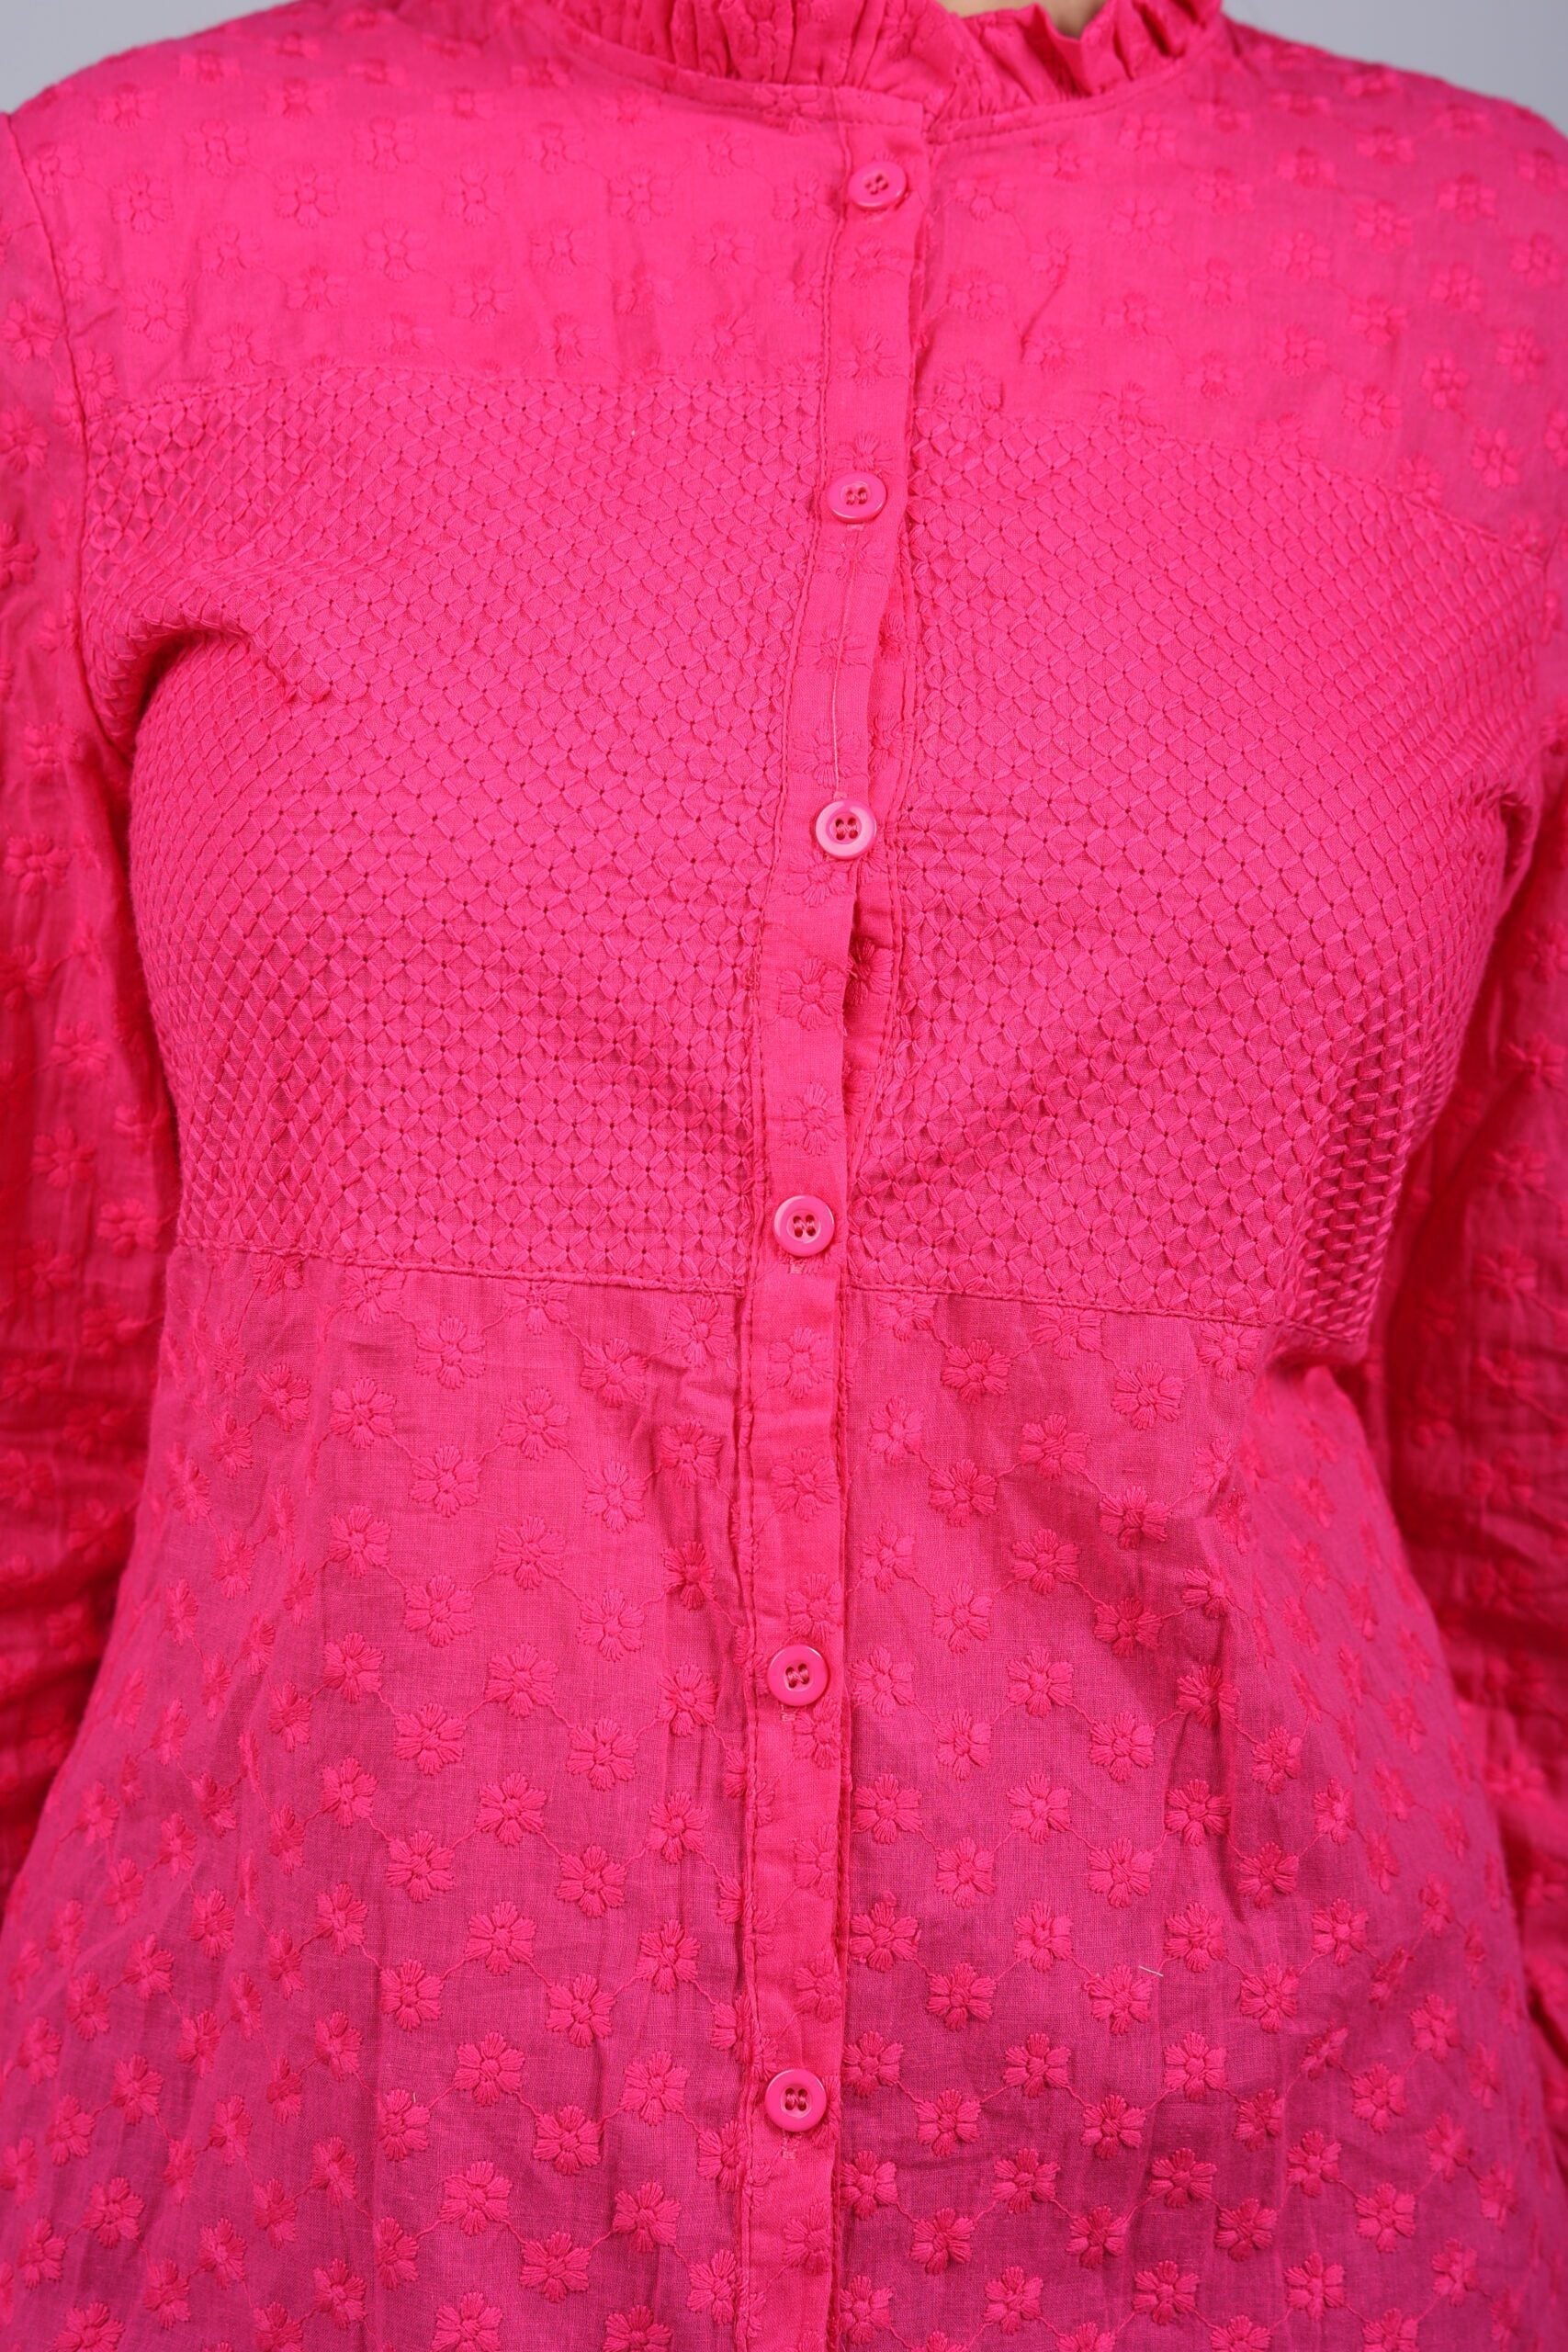 Chicken Shirt Designer (Hot Pink) Unleash Your Vibrant Style